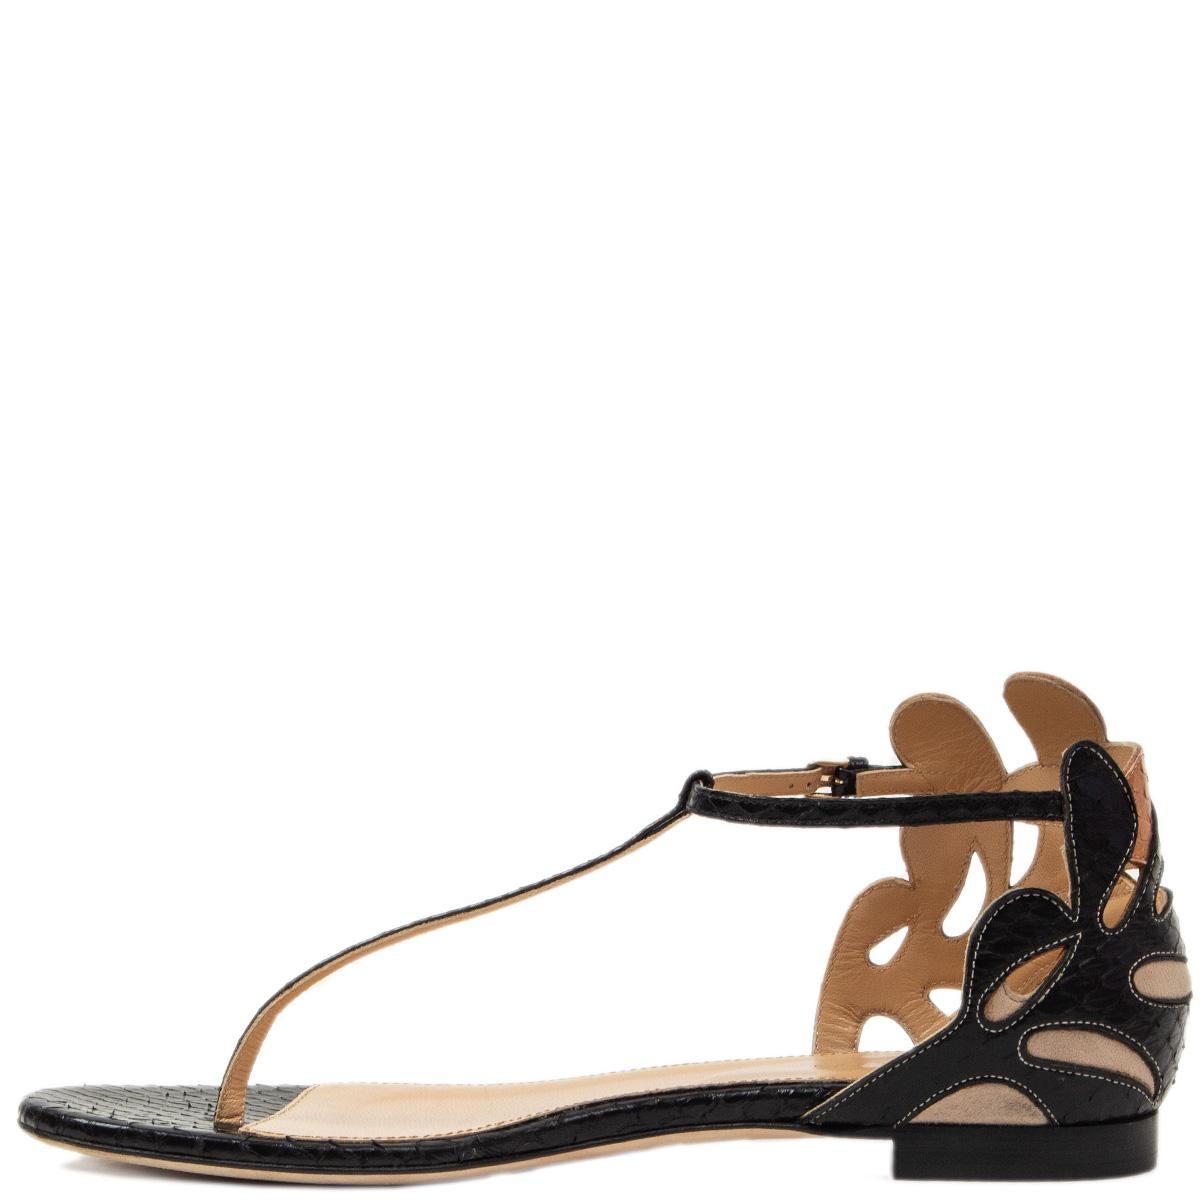 SERGIO ROSSI tan nude python Flats Sandalen Schuhe 39 (Braun) im Angebot